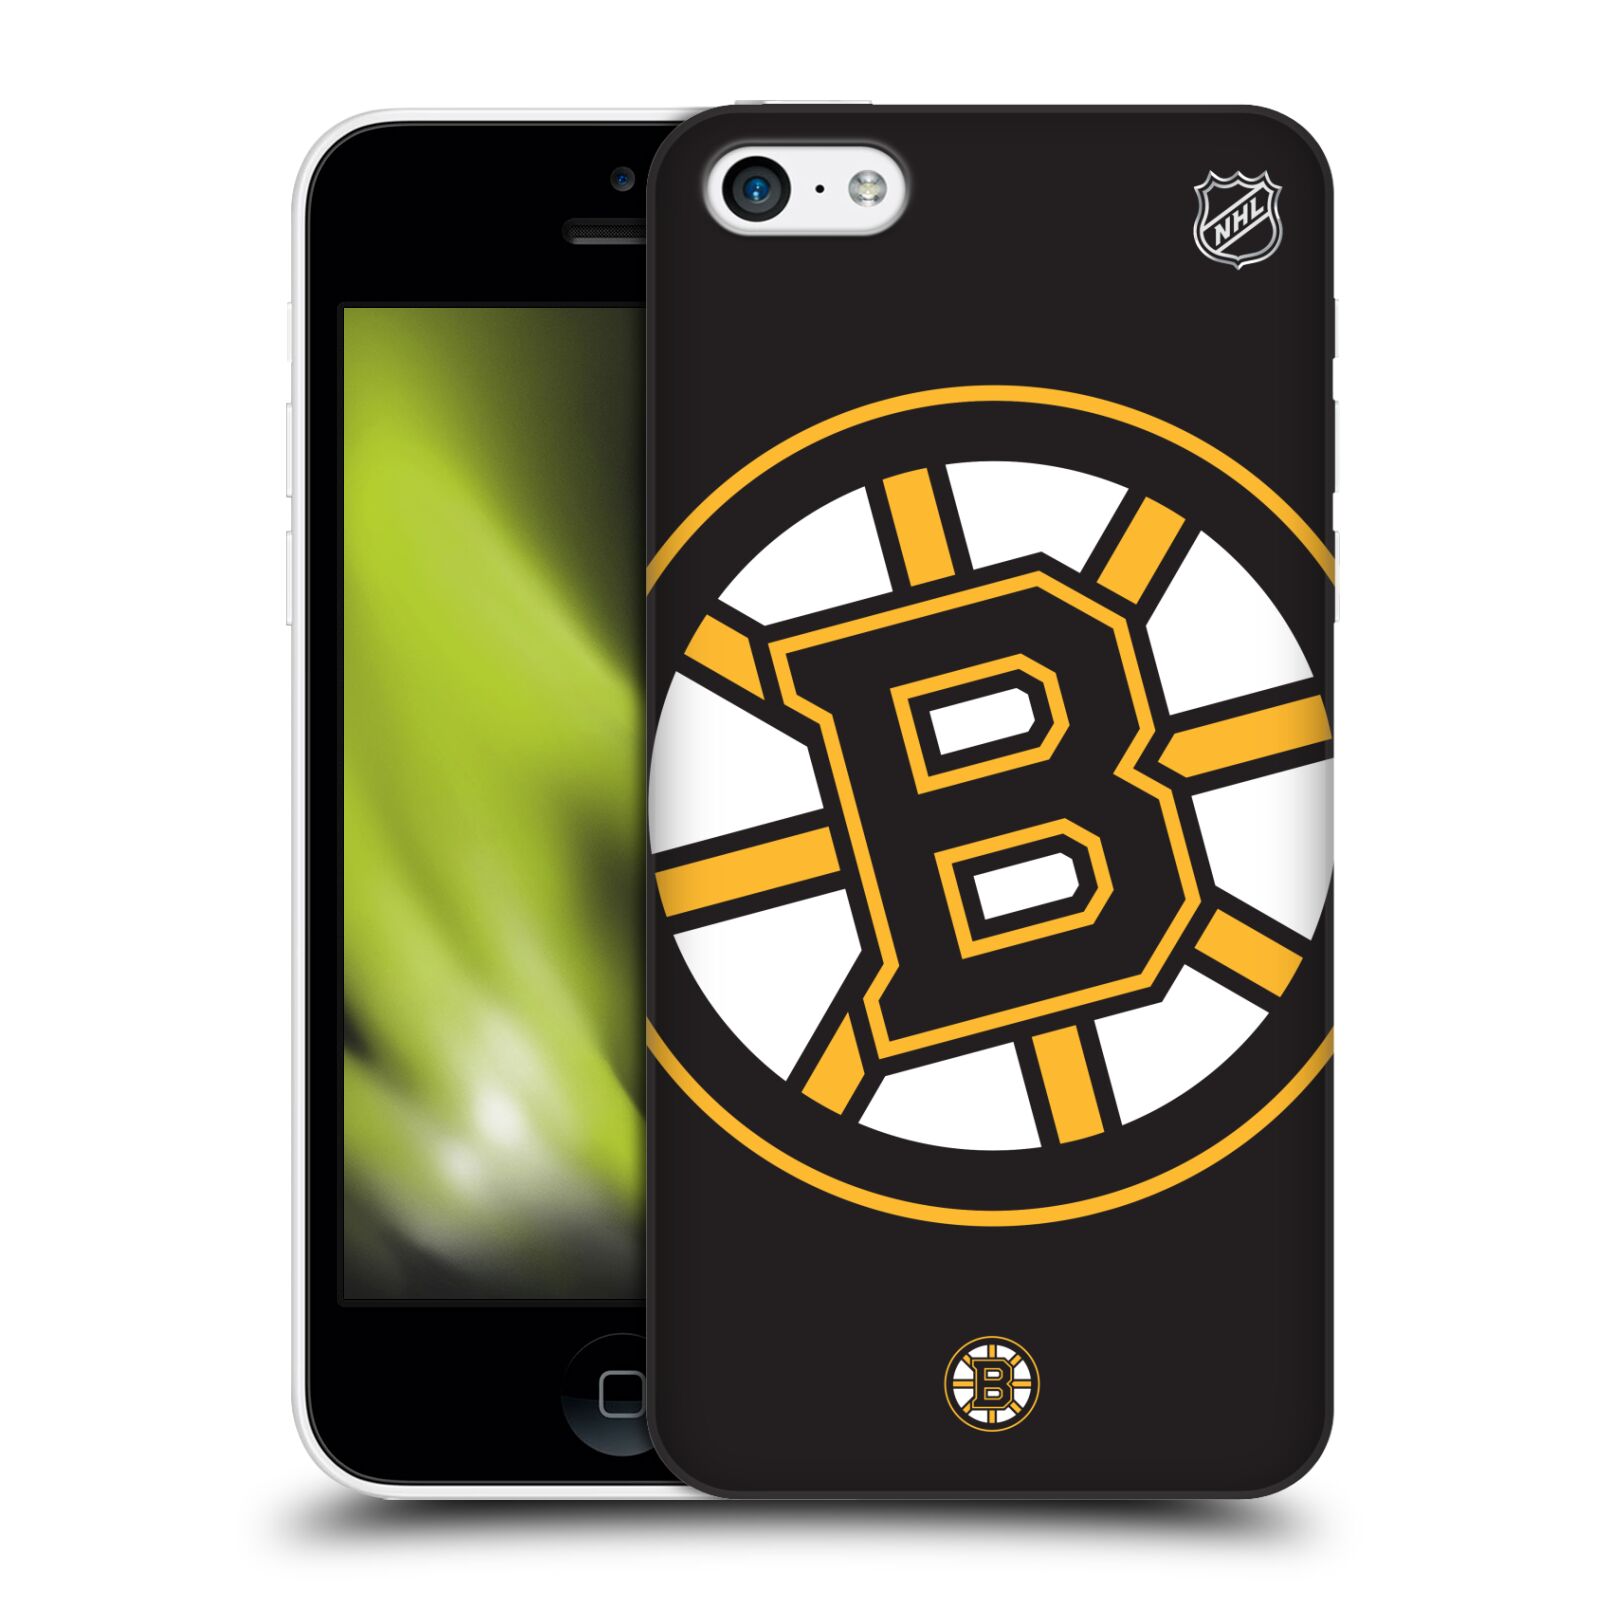 Pouzdro na mobil Apple Iphone 5C - HEAD CASE - Hokej NHL - Boston Bruins - velký znak